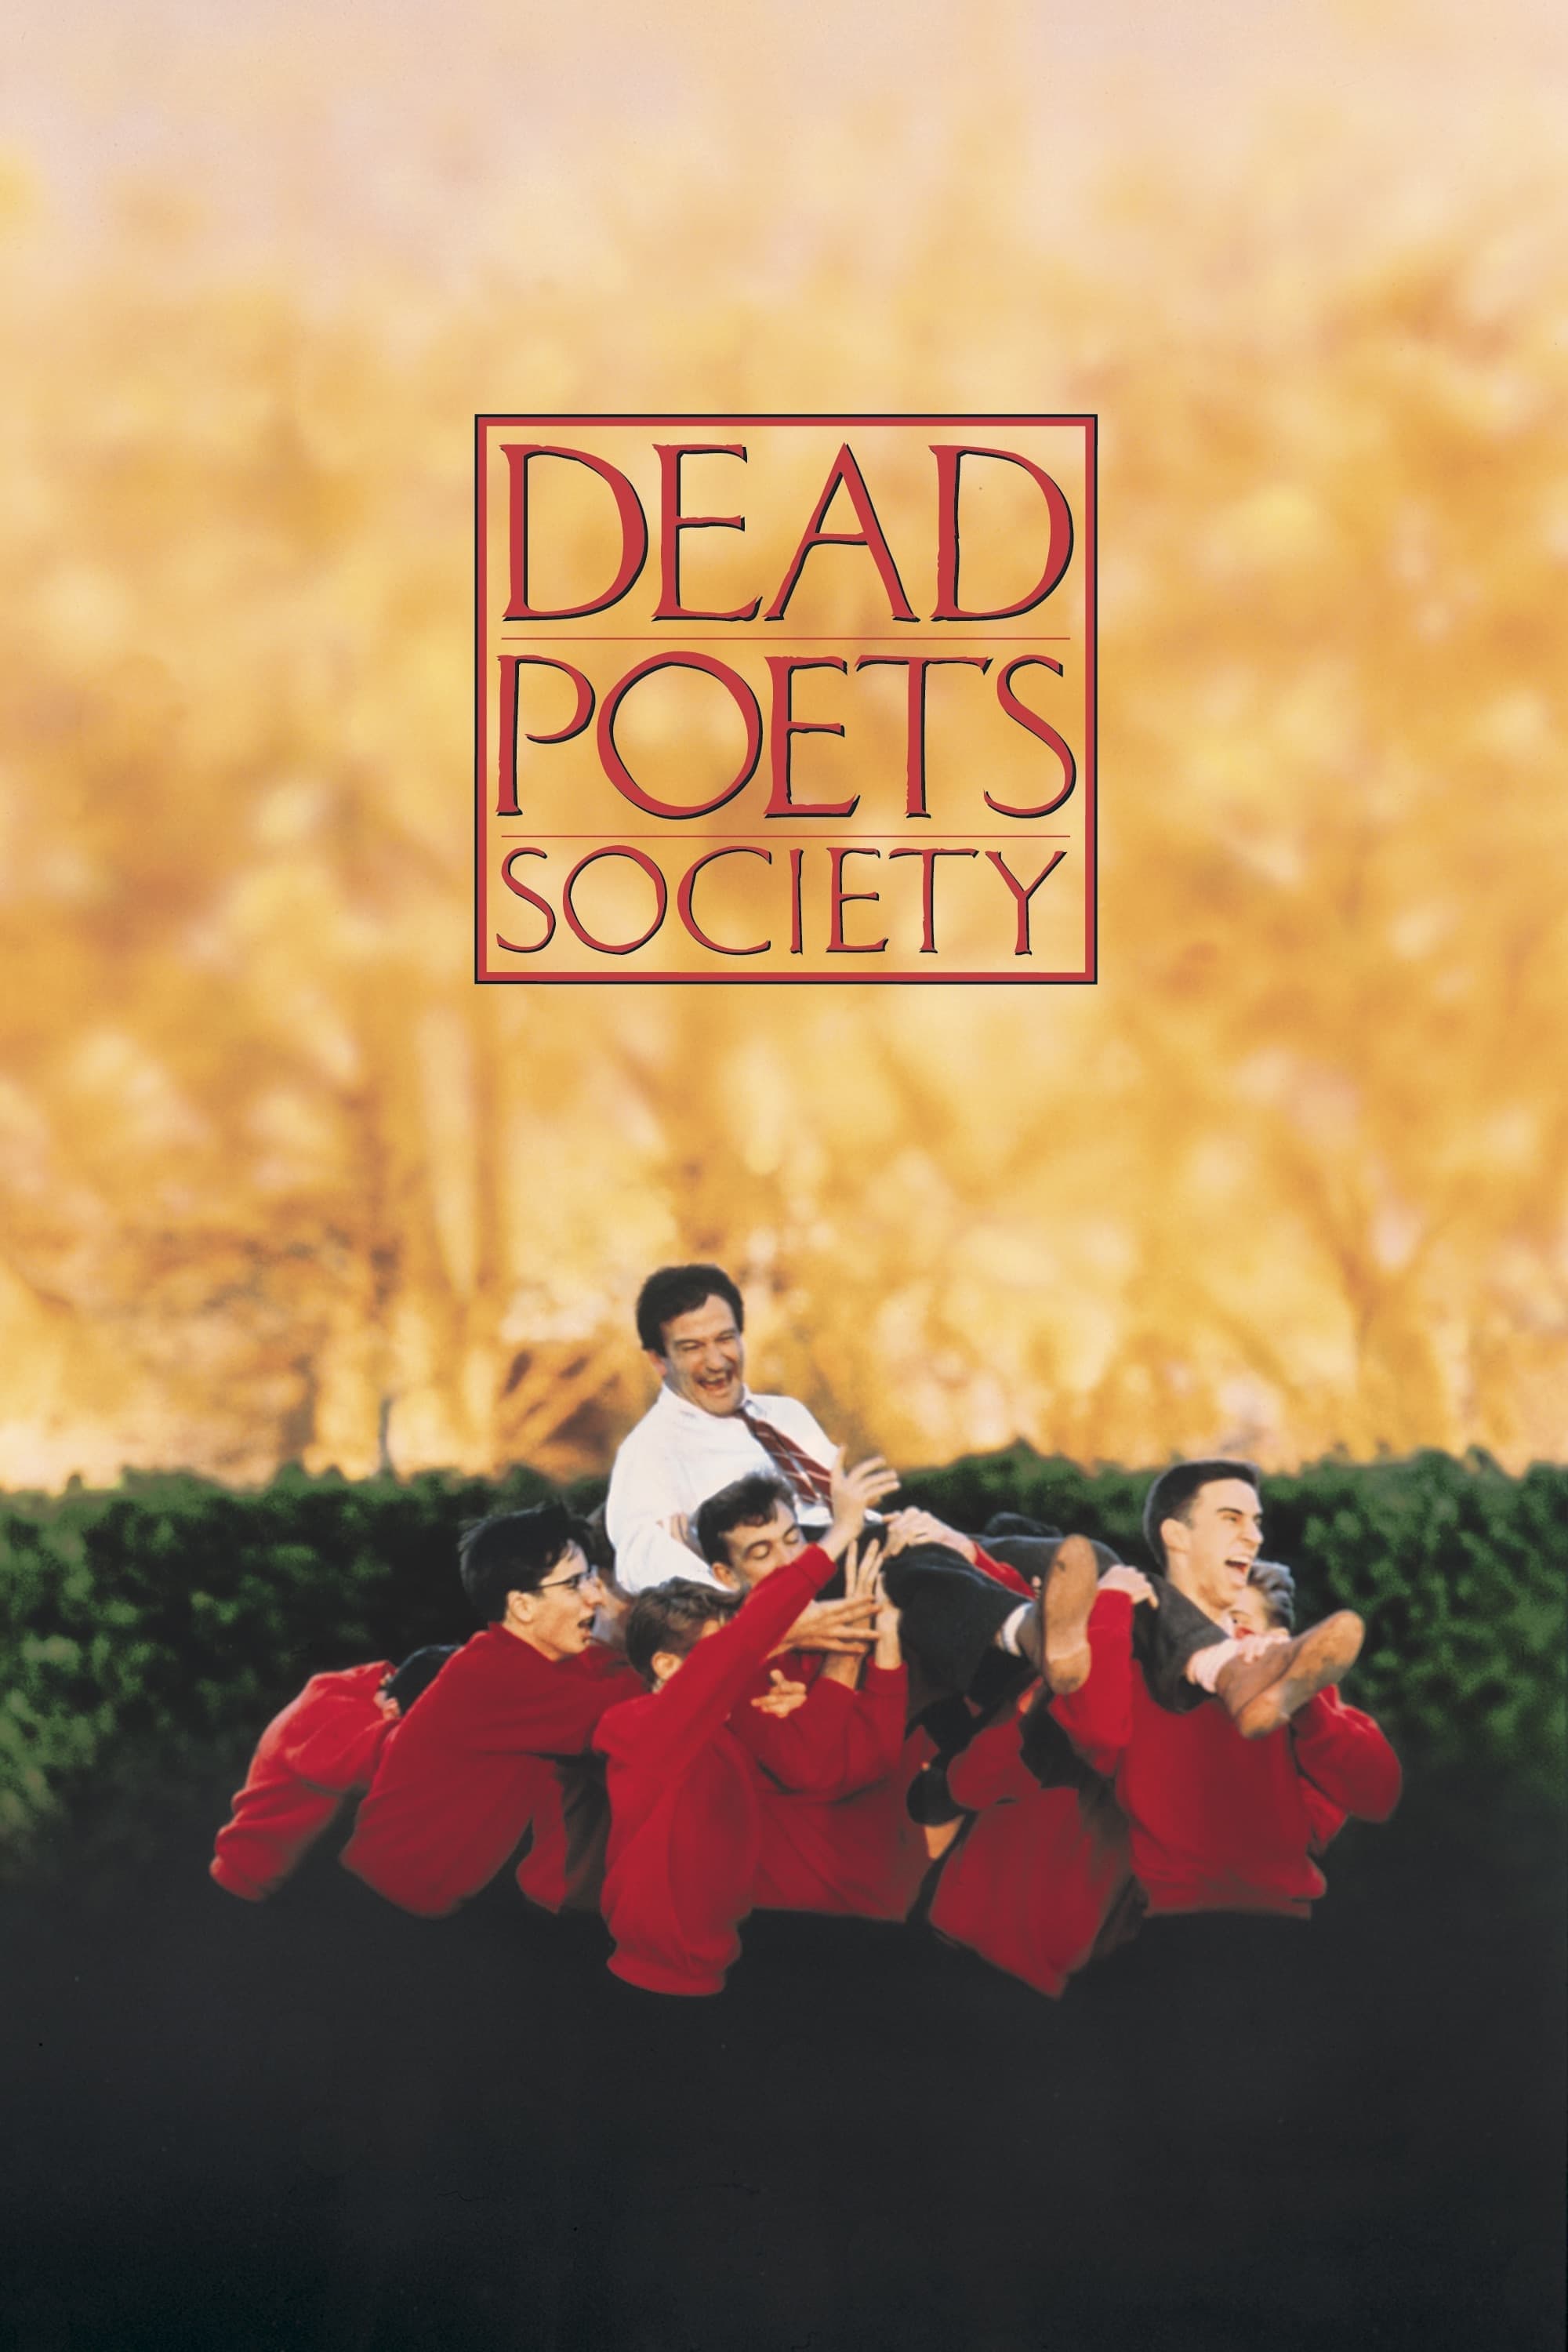 Sociedade dos Poetas Mortos (1989)